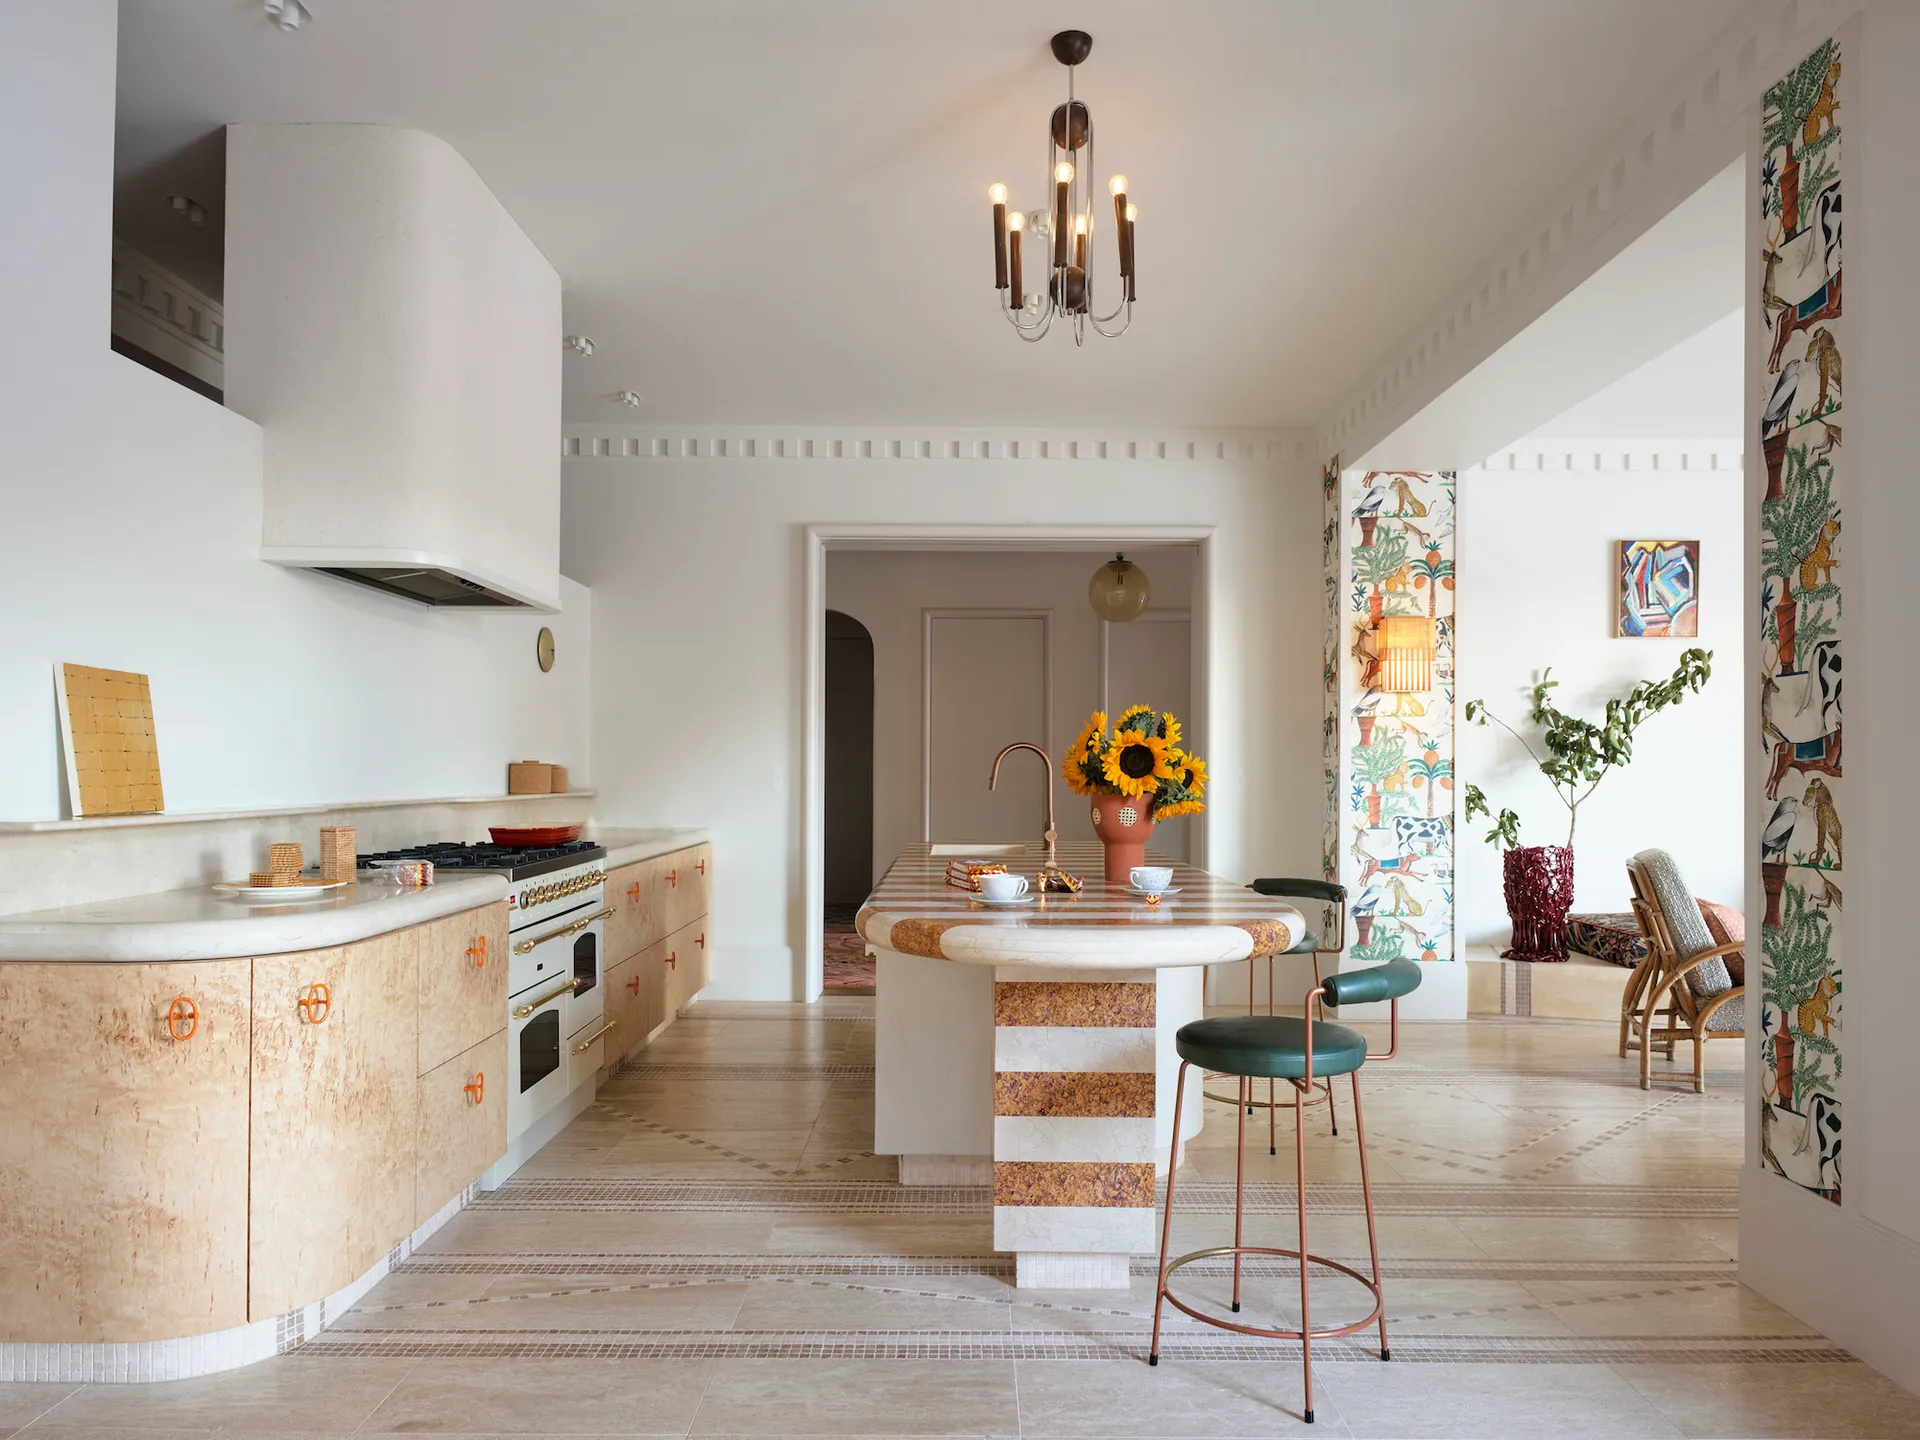 Kitchen featuring a kitchen island in Brocatello di Spagna marble and white travertine